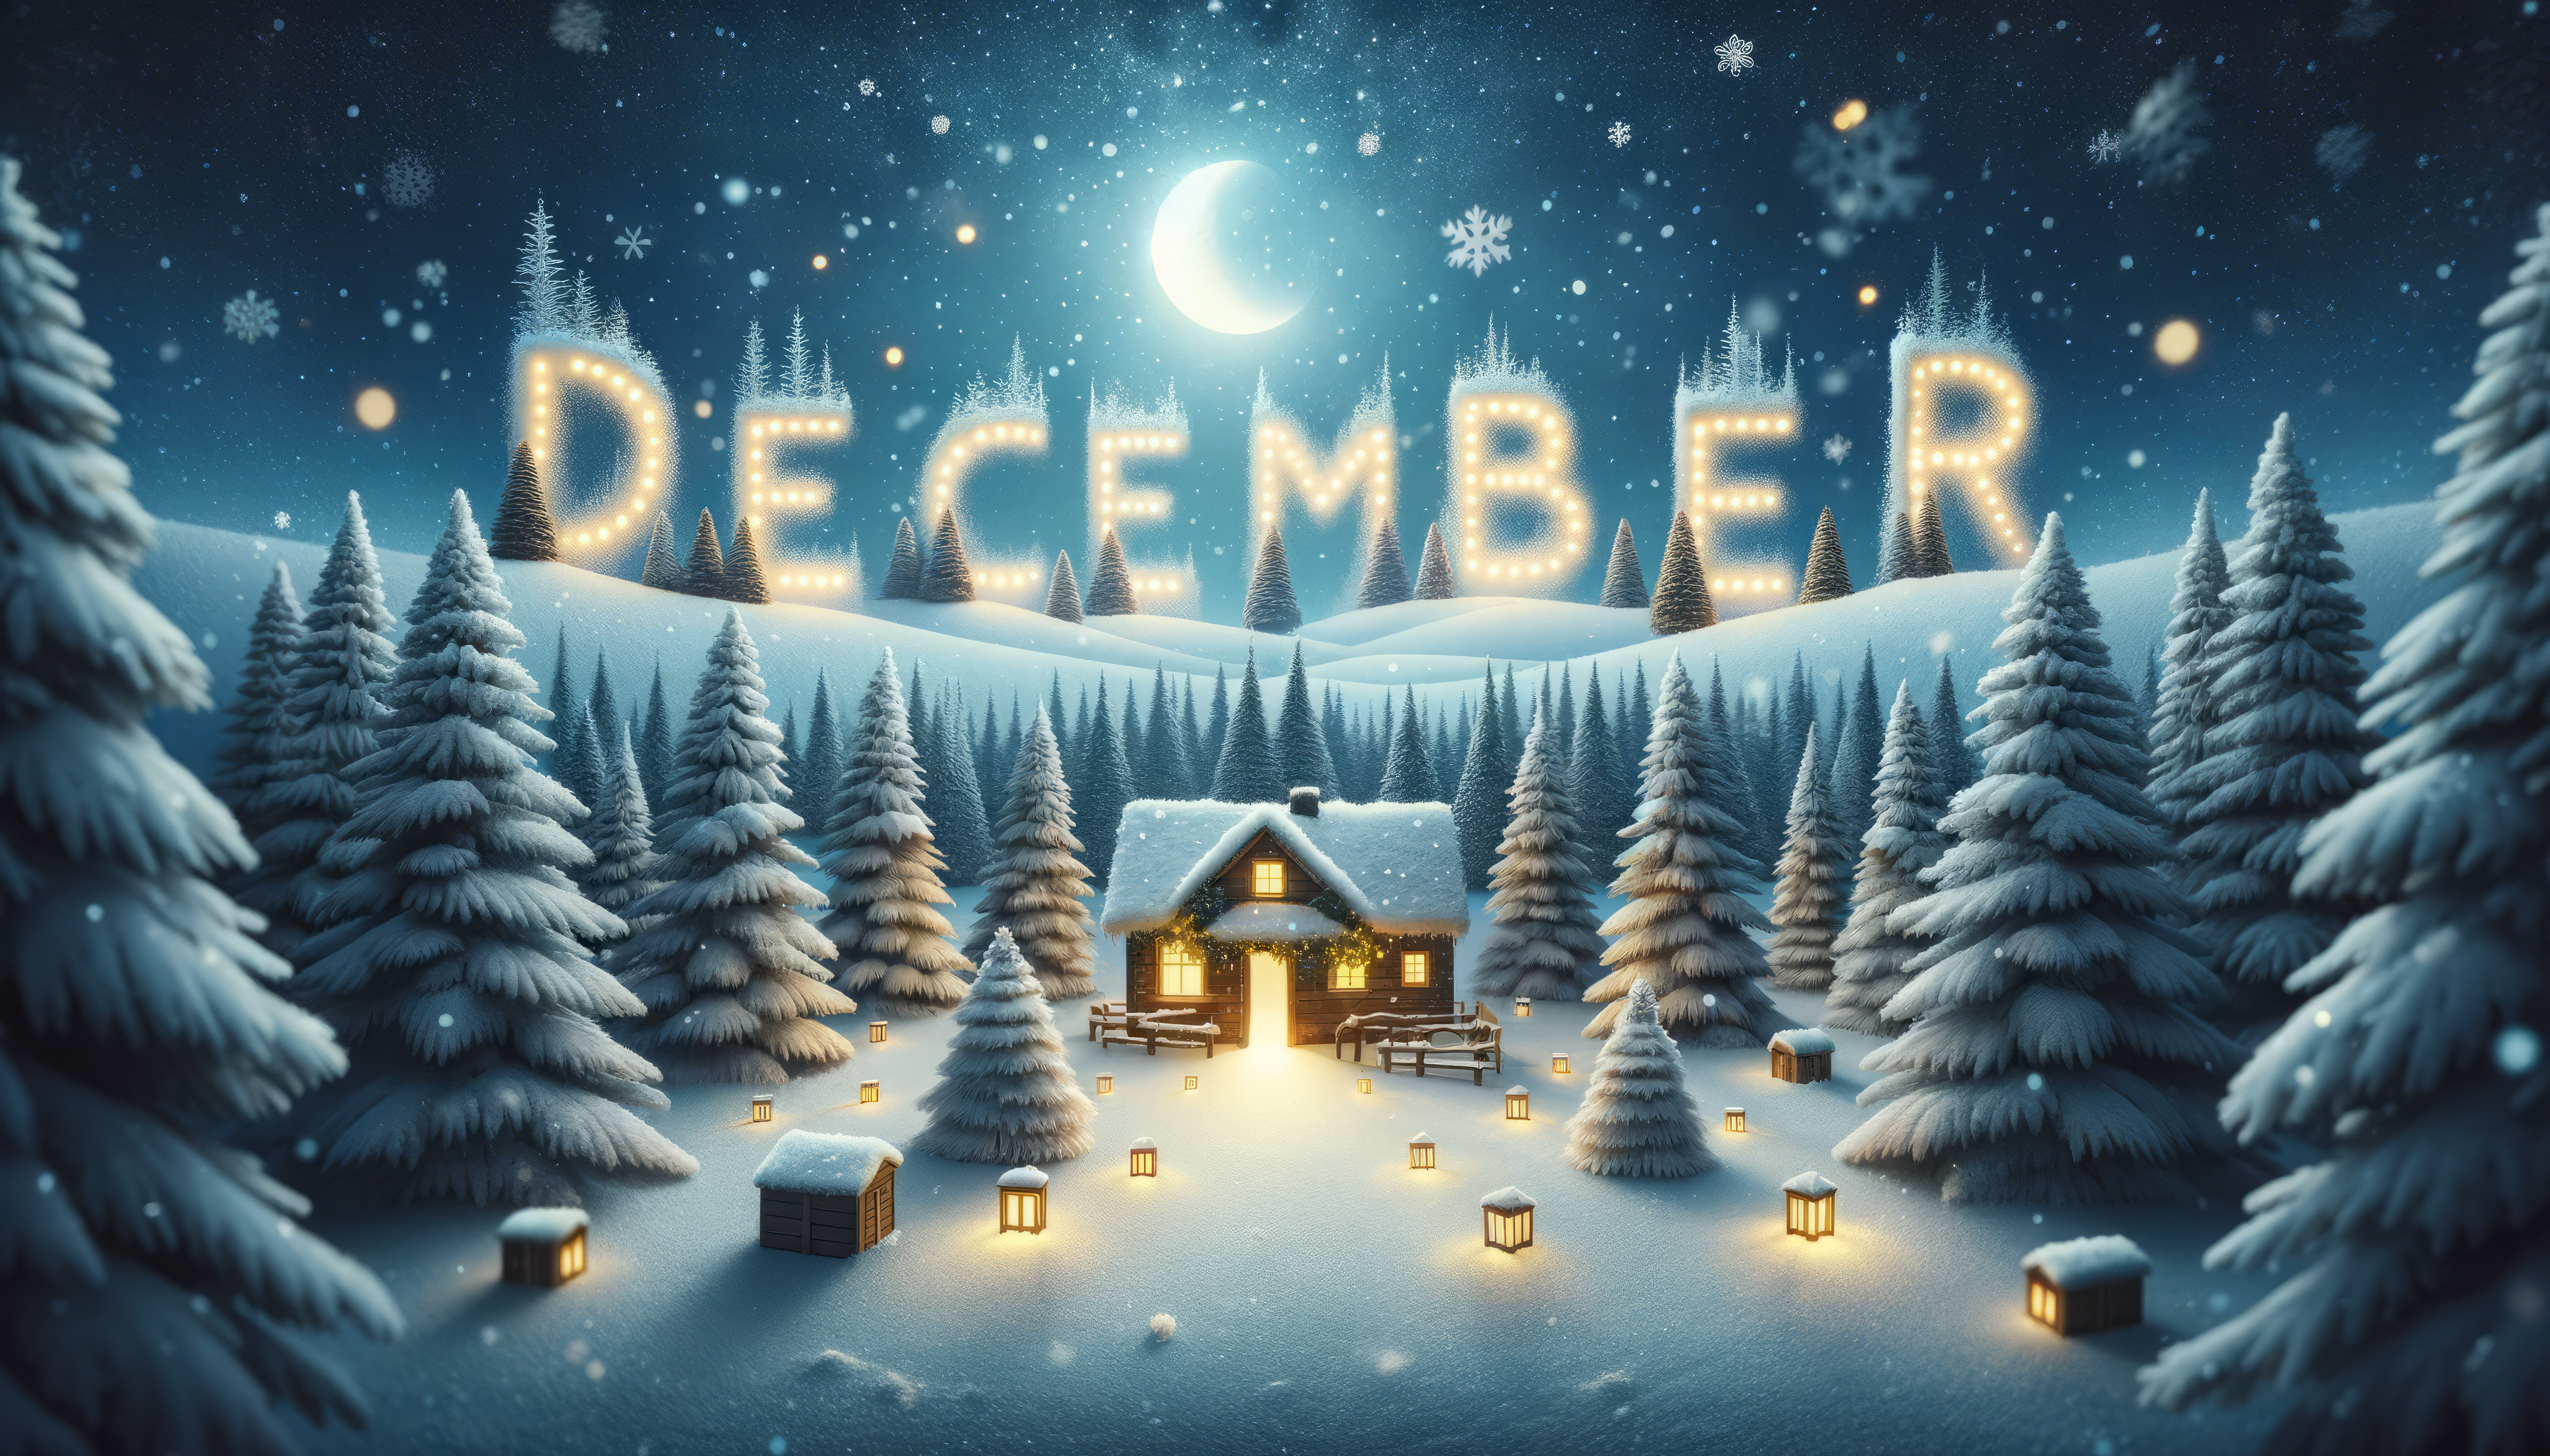 Enchanting December Winter Wonderland HD Wallpaper By Robokoboto